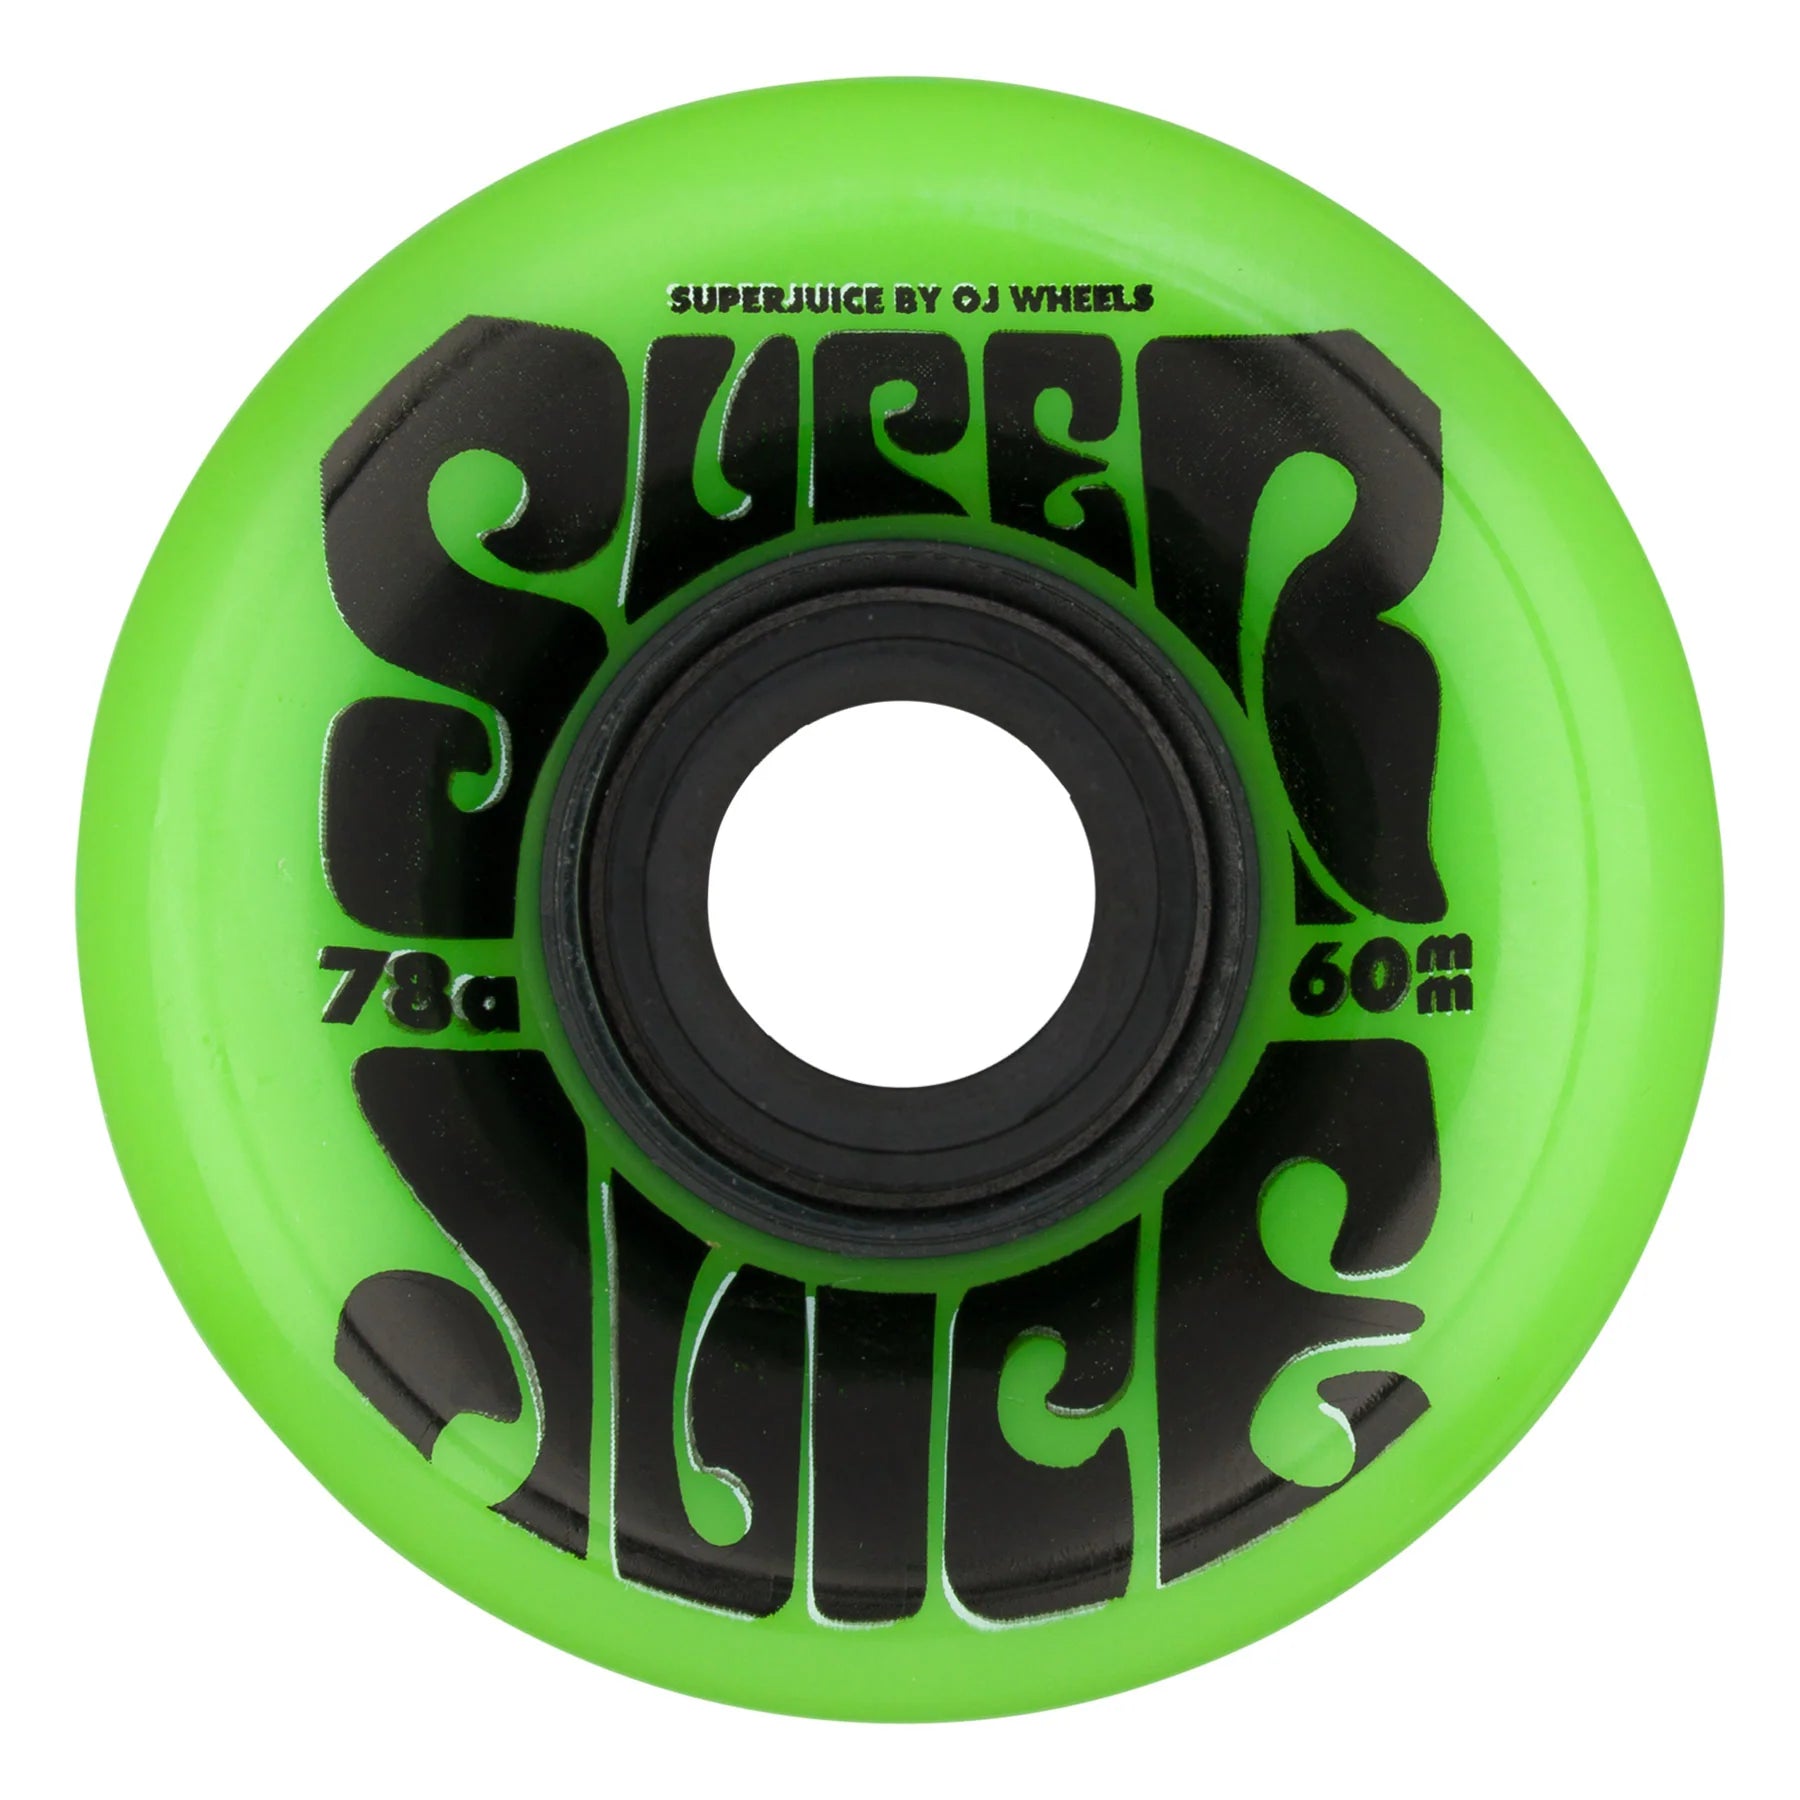 OJ Super Juice Bright Green 78a 60mm